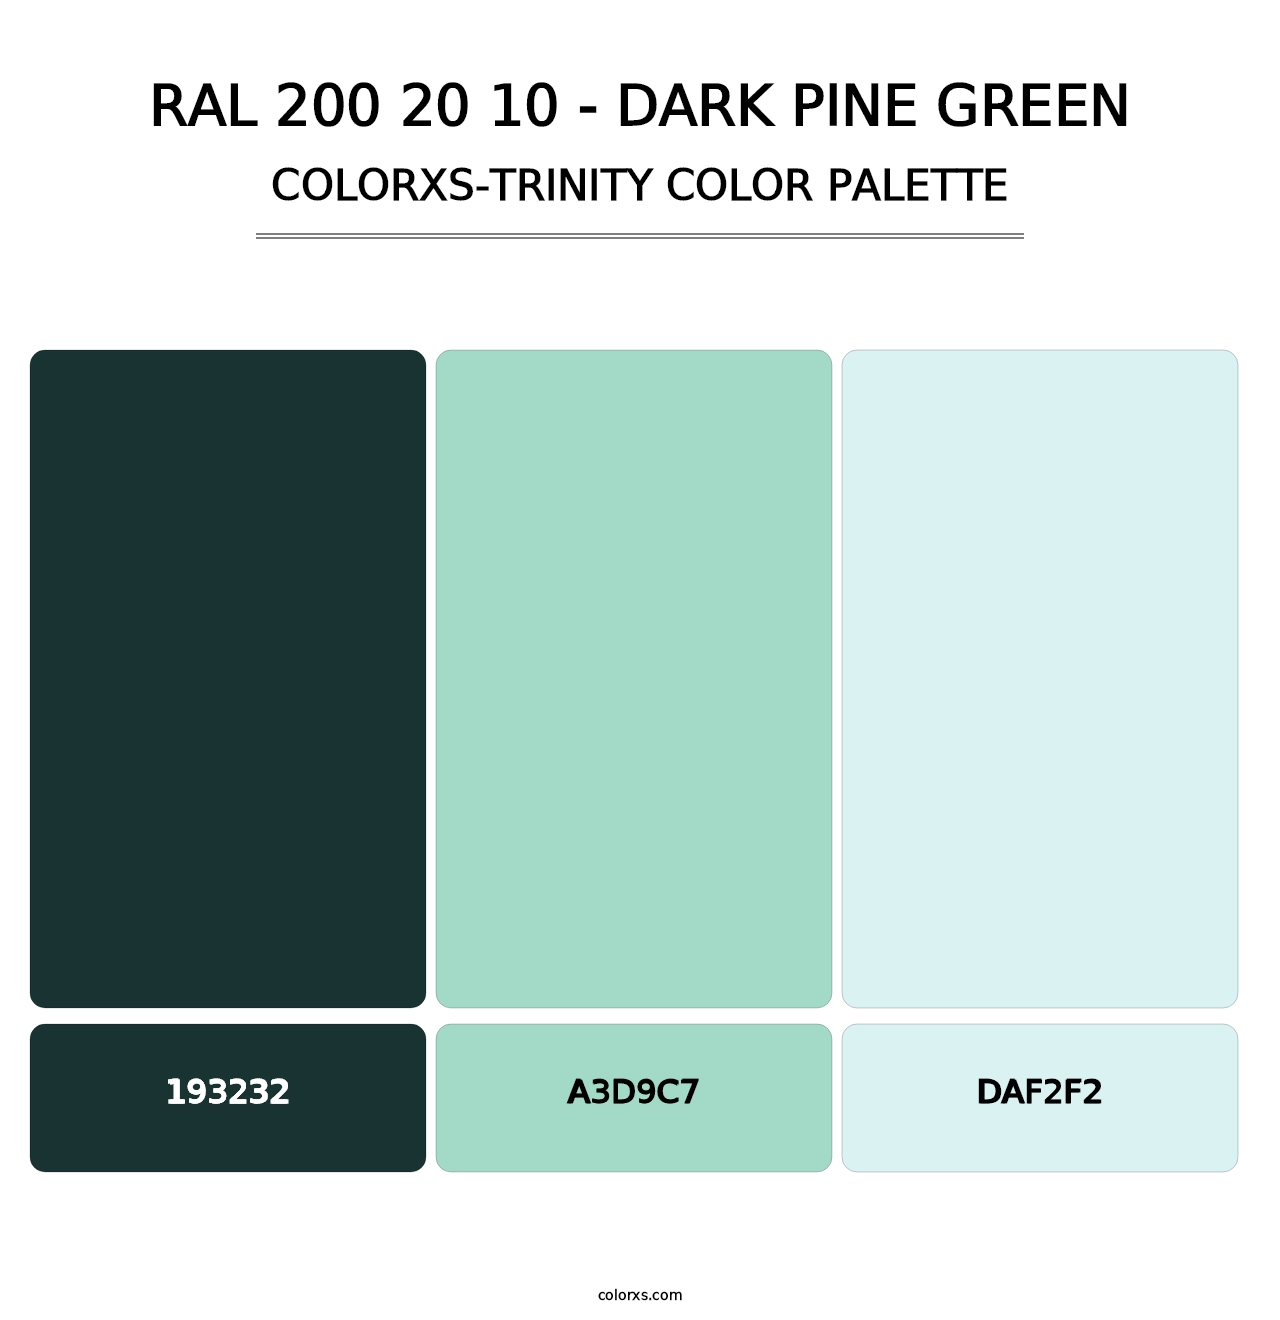 RAL 200 20 10 - Dark Pine Green - Colorxs Trinity Palette